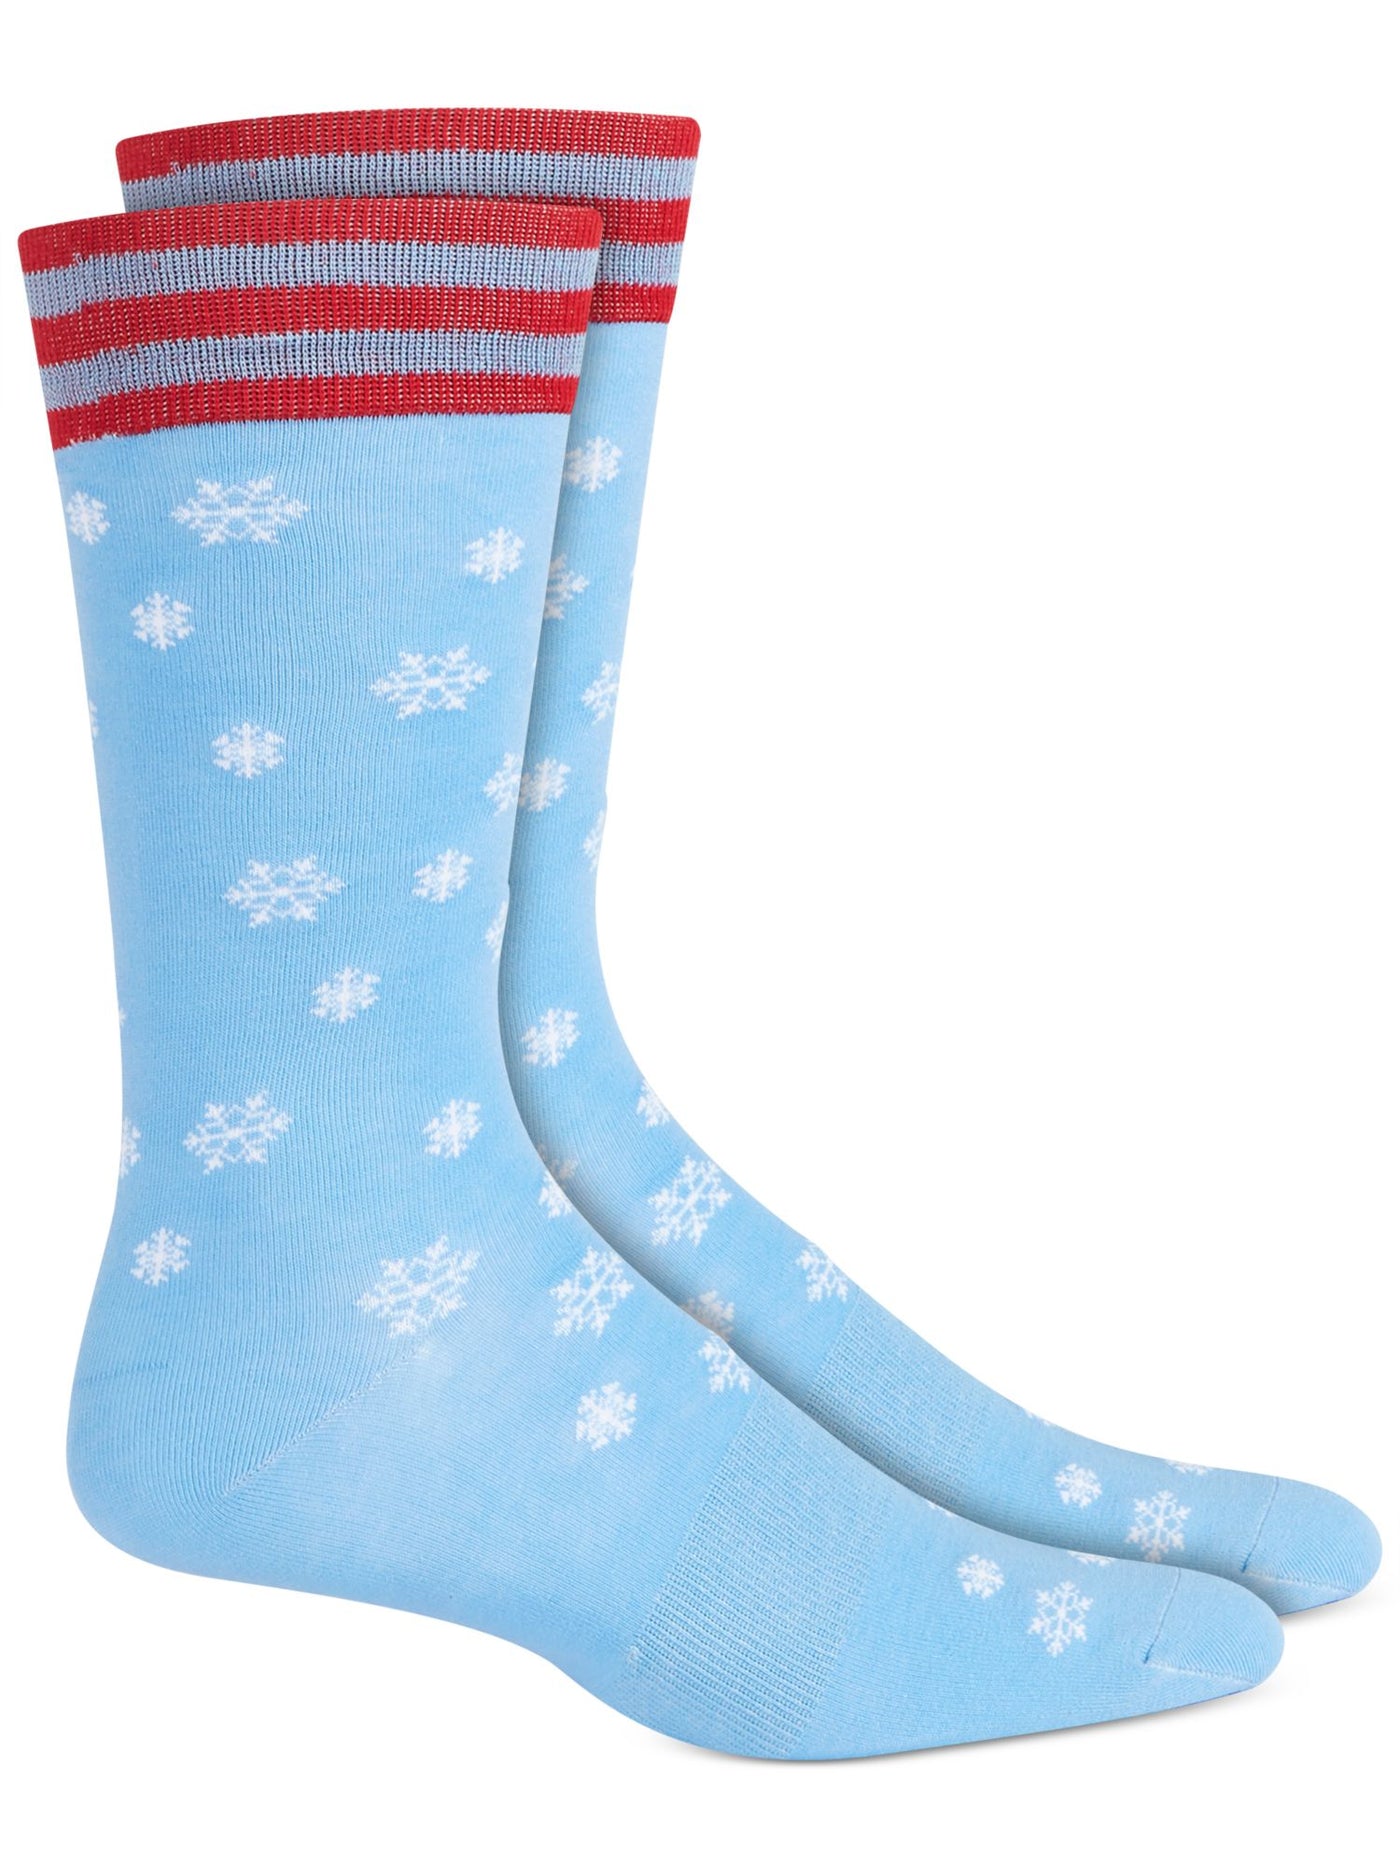 BAR III Mens Light Blue Printed Snowflake Novelty Crew Socks 7-12